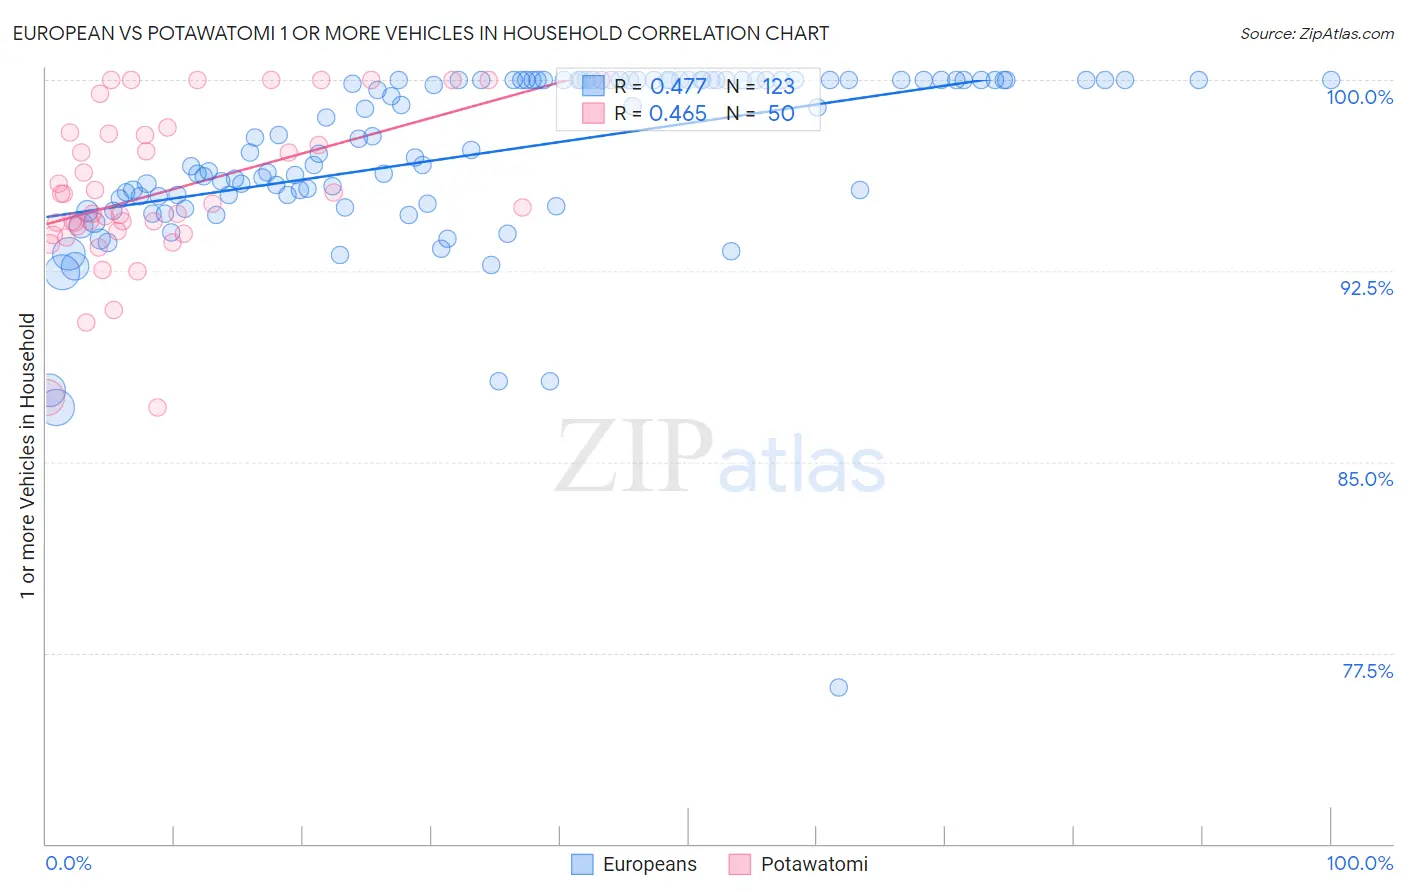 European vs Potawatomi 1 or more Vehicles in Household